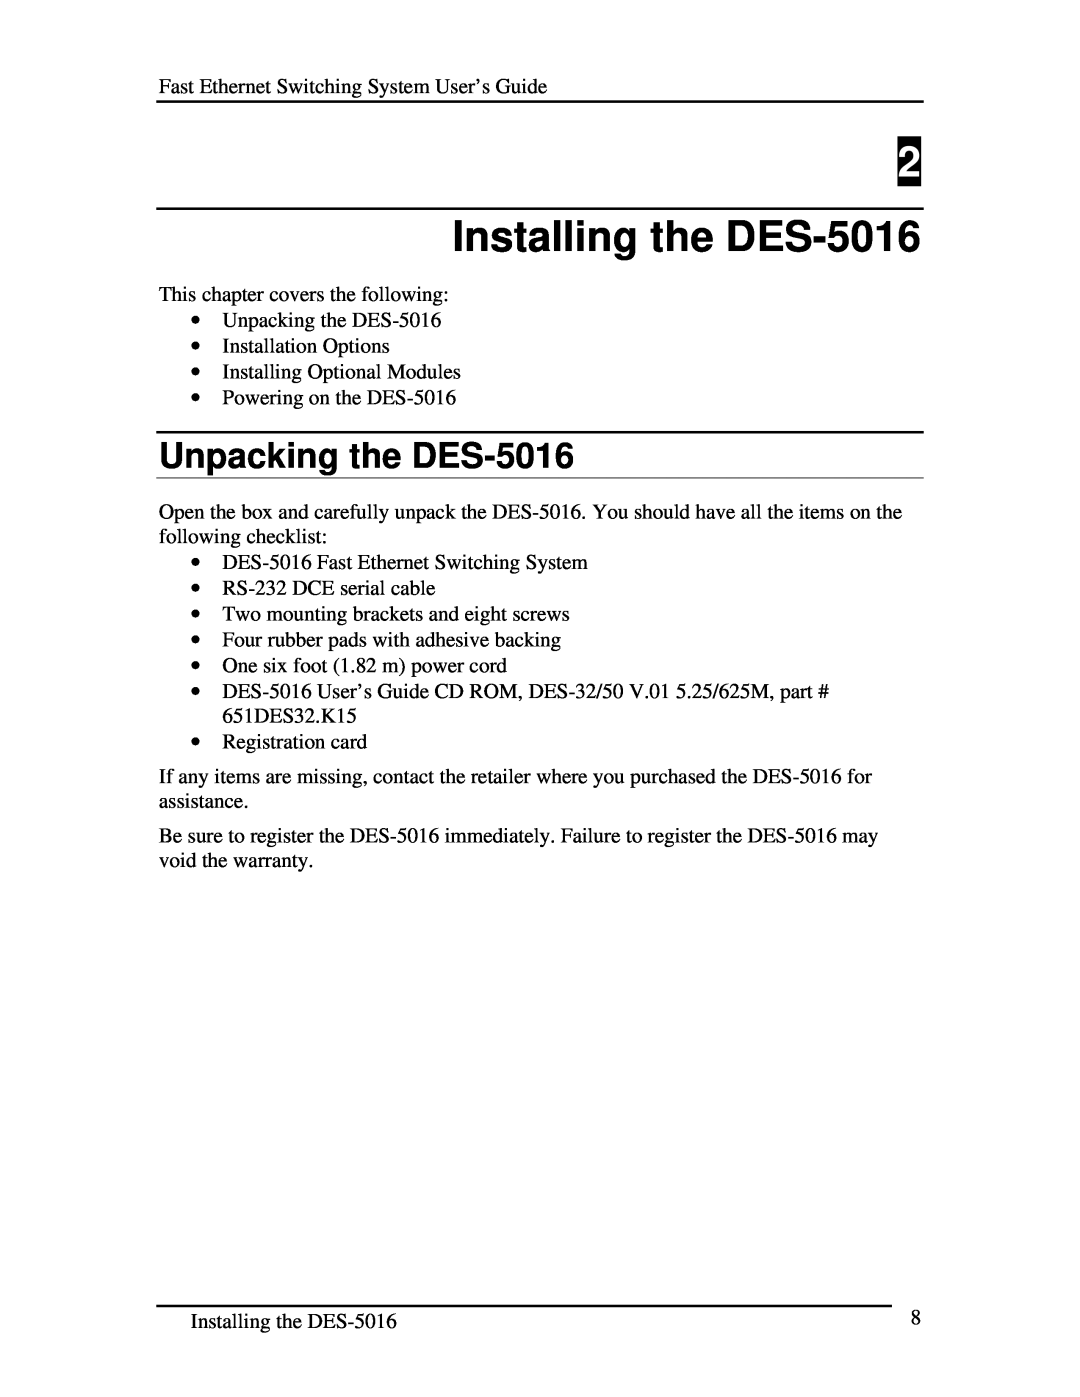 D-Link manual Installing the DES-5016, Unpacking the DES-5016 